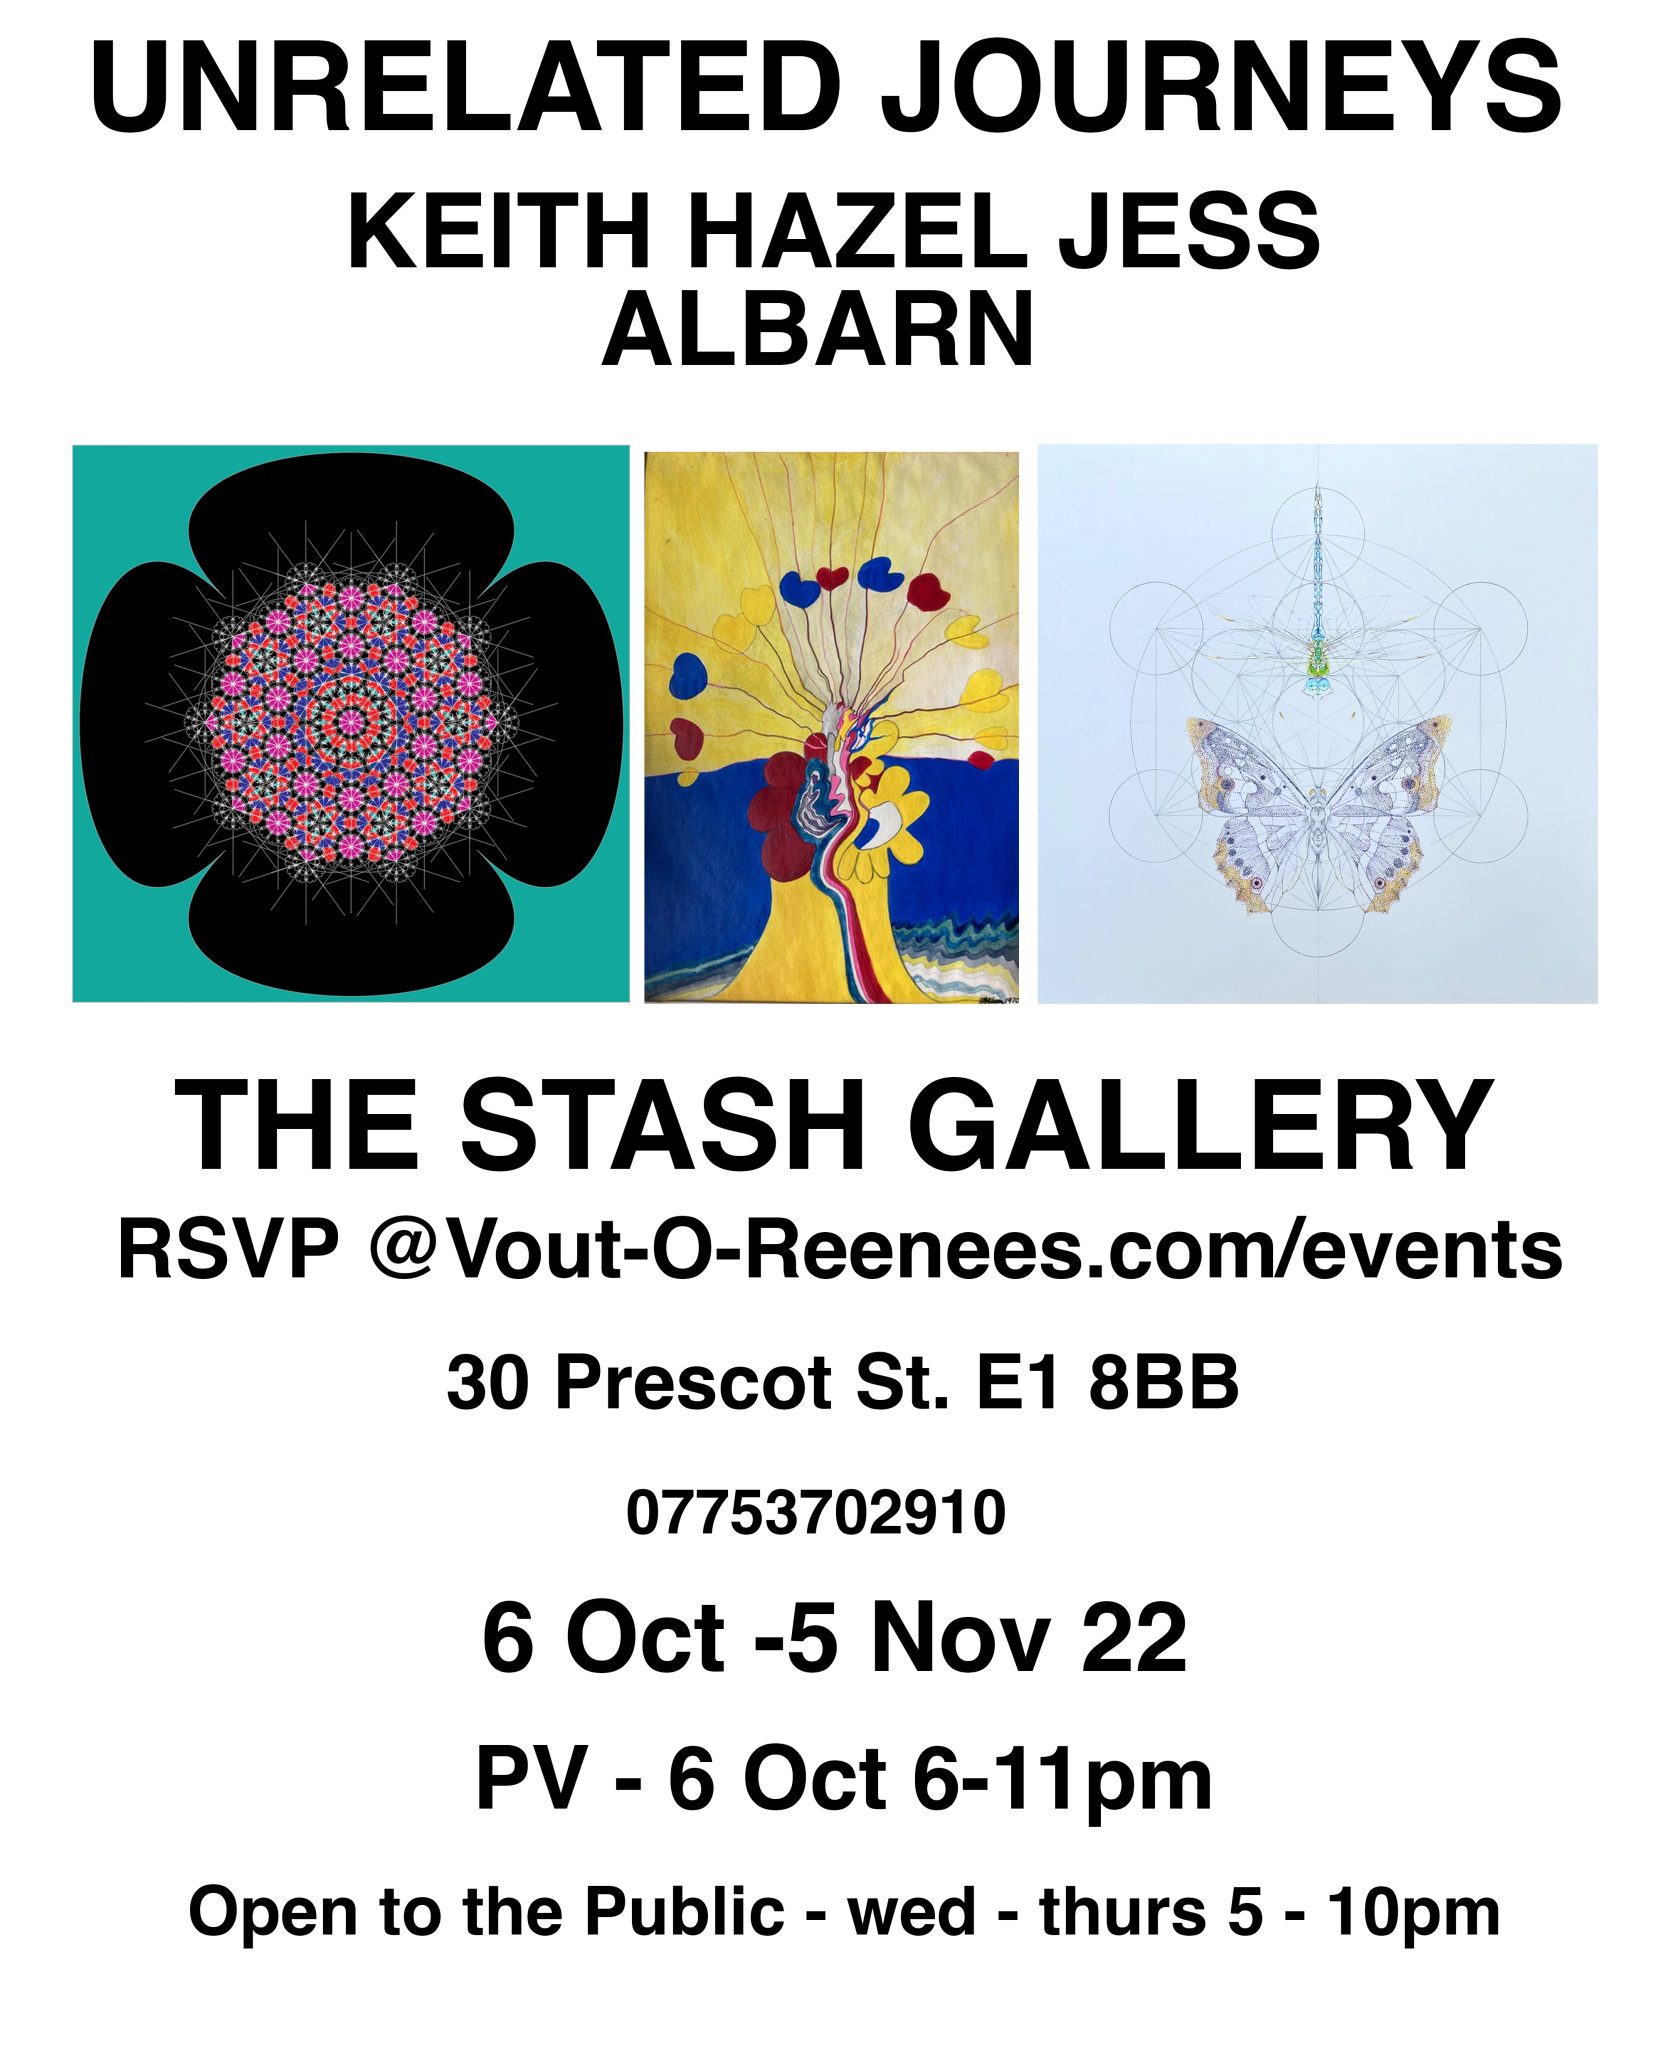 Keith, Jessica + Hazel Albarn -Artists Talk 13 Oct Thursday 7pm